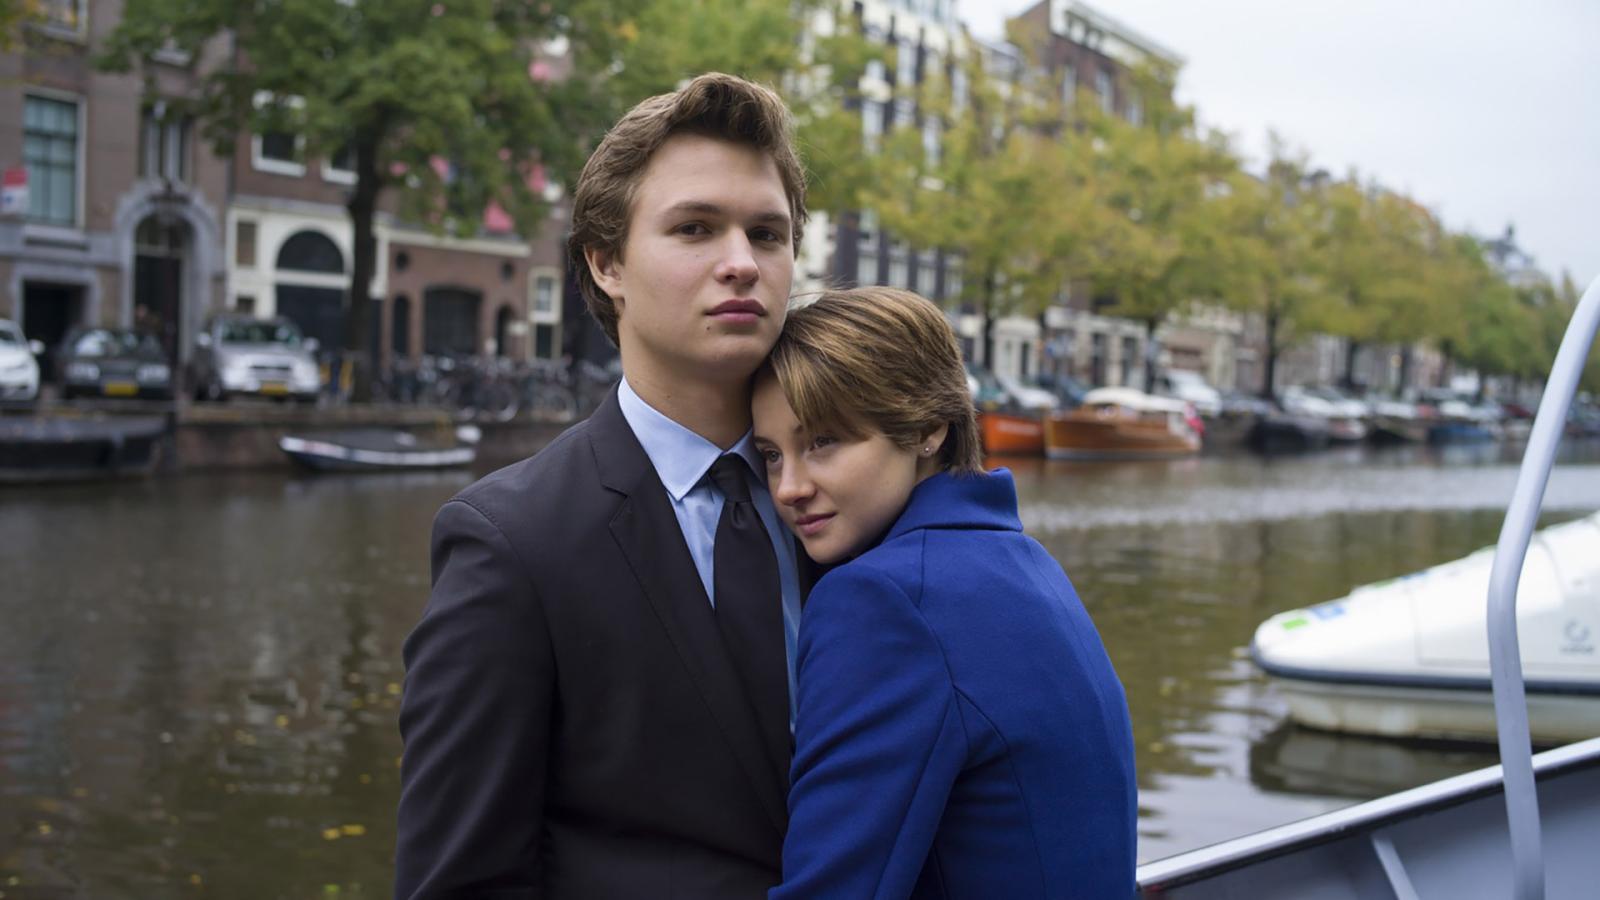 10 Romance Films with Heartbreaking Endings Prove Love Doesn't Always Win - image 7